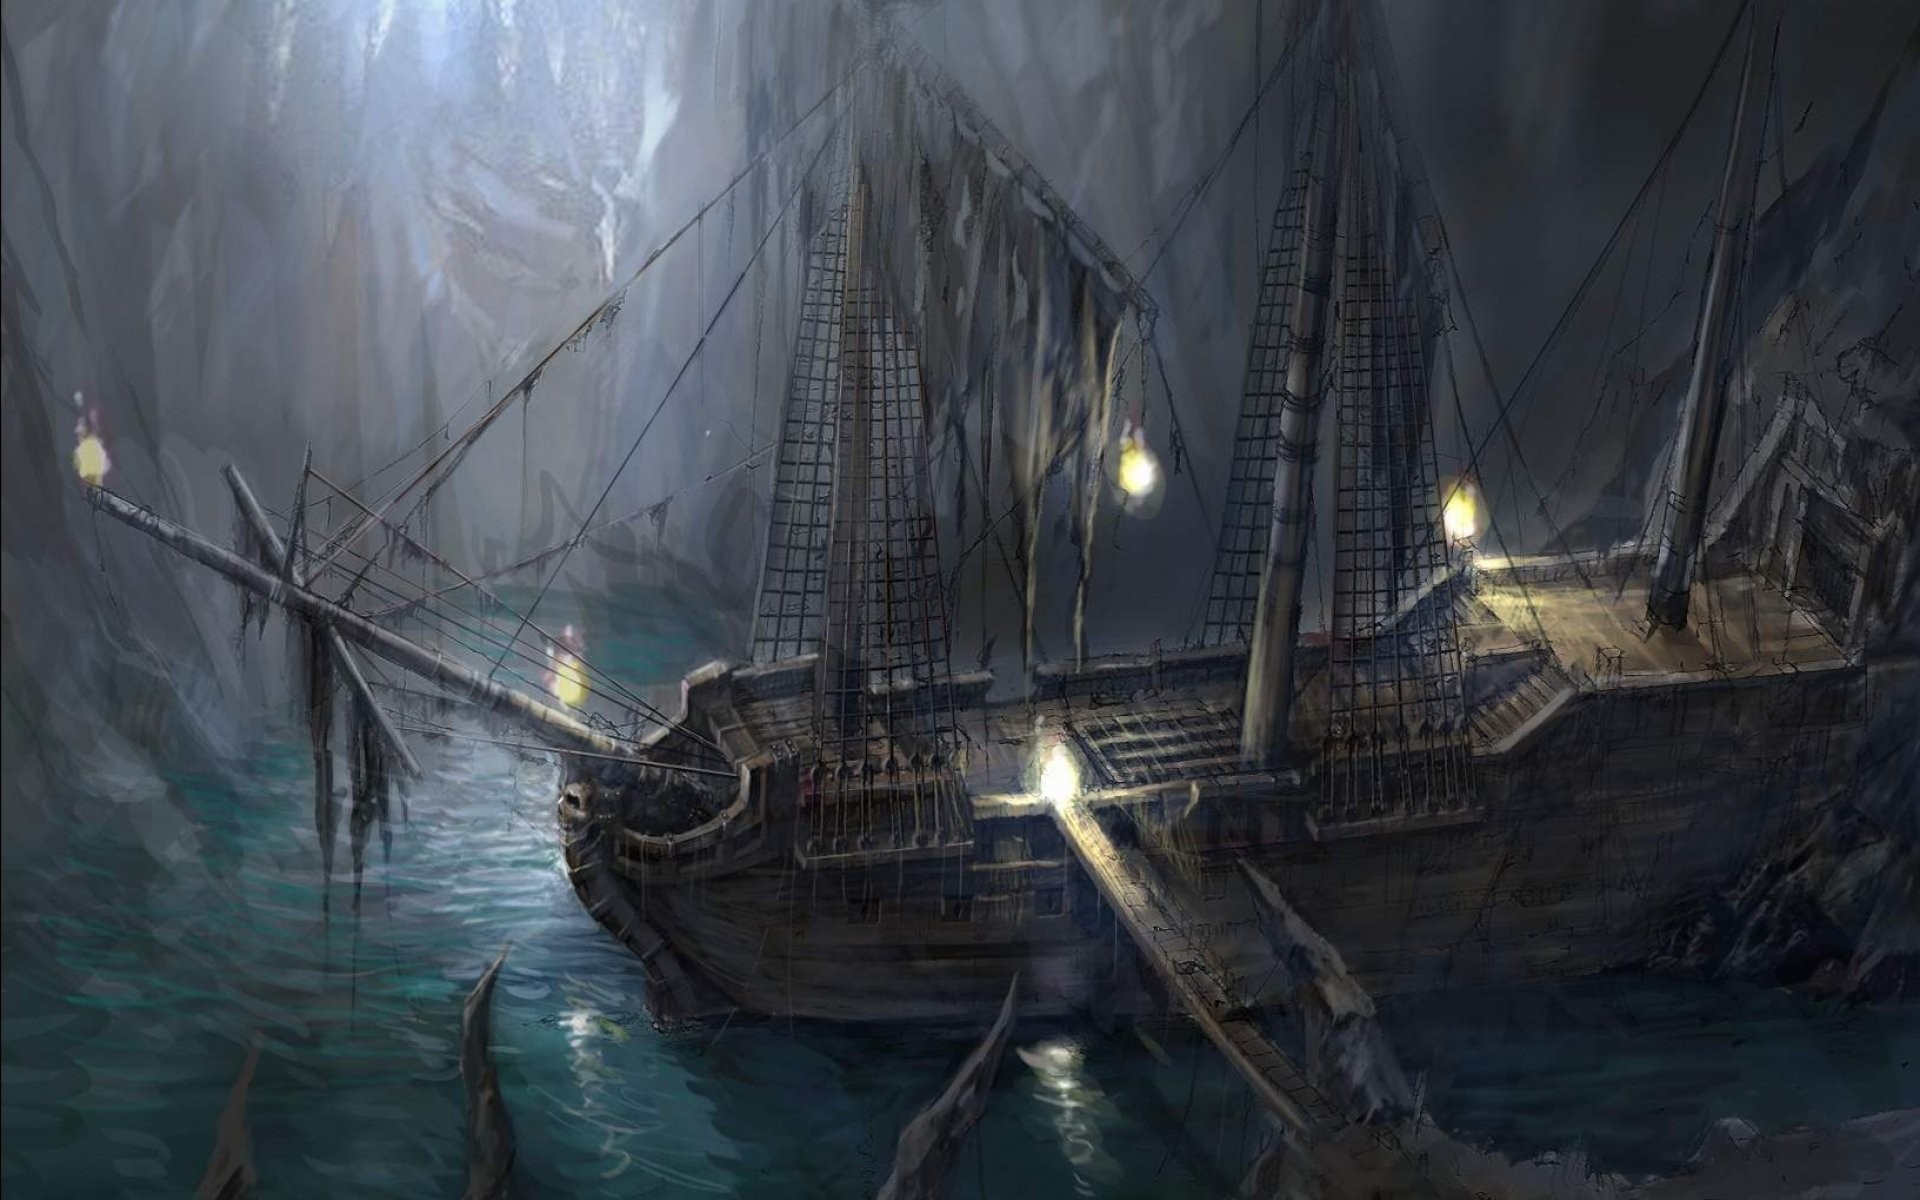 Cave Pirate Ship Fantasy Art - HD Wallpaper 